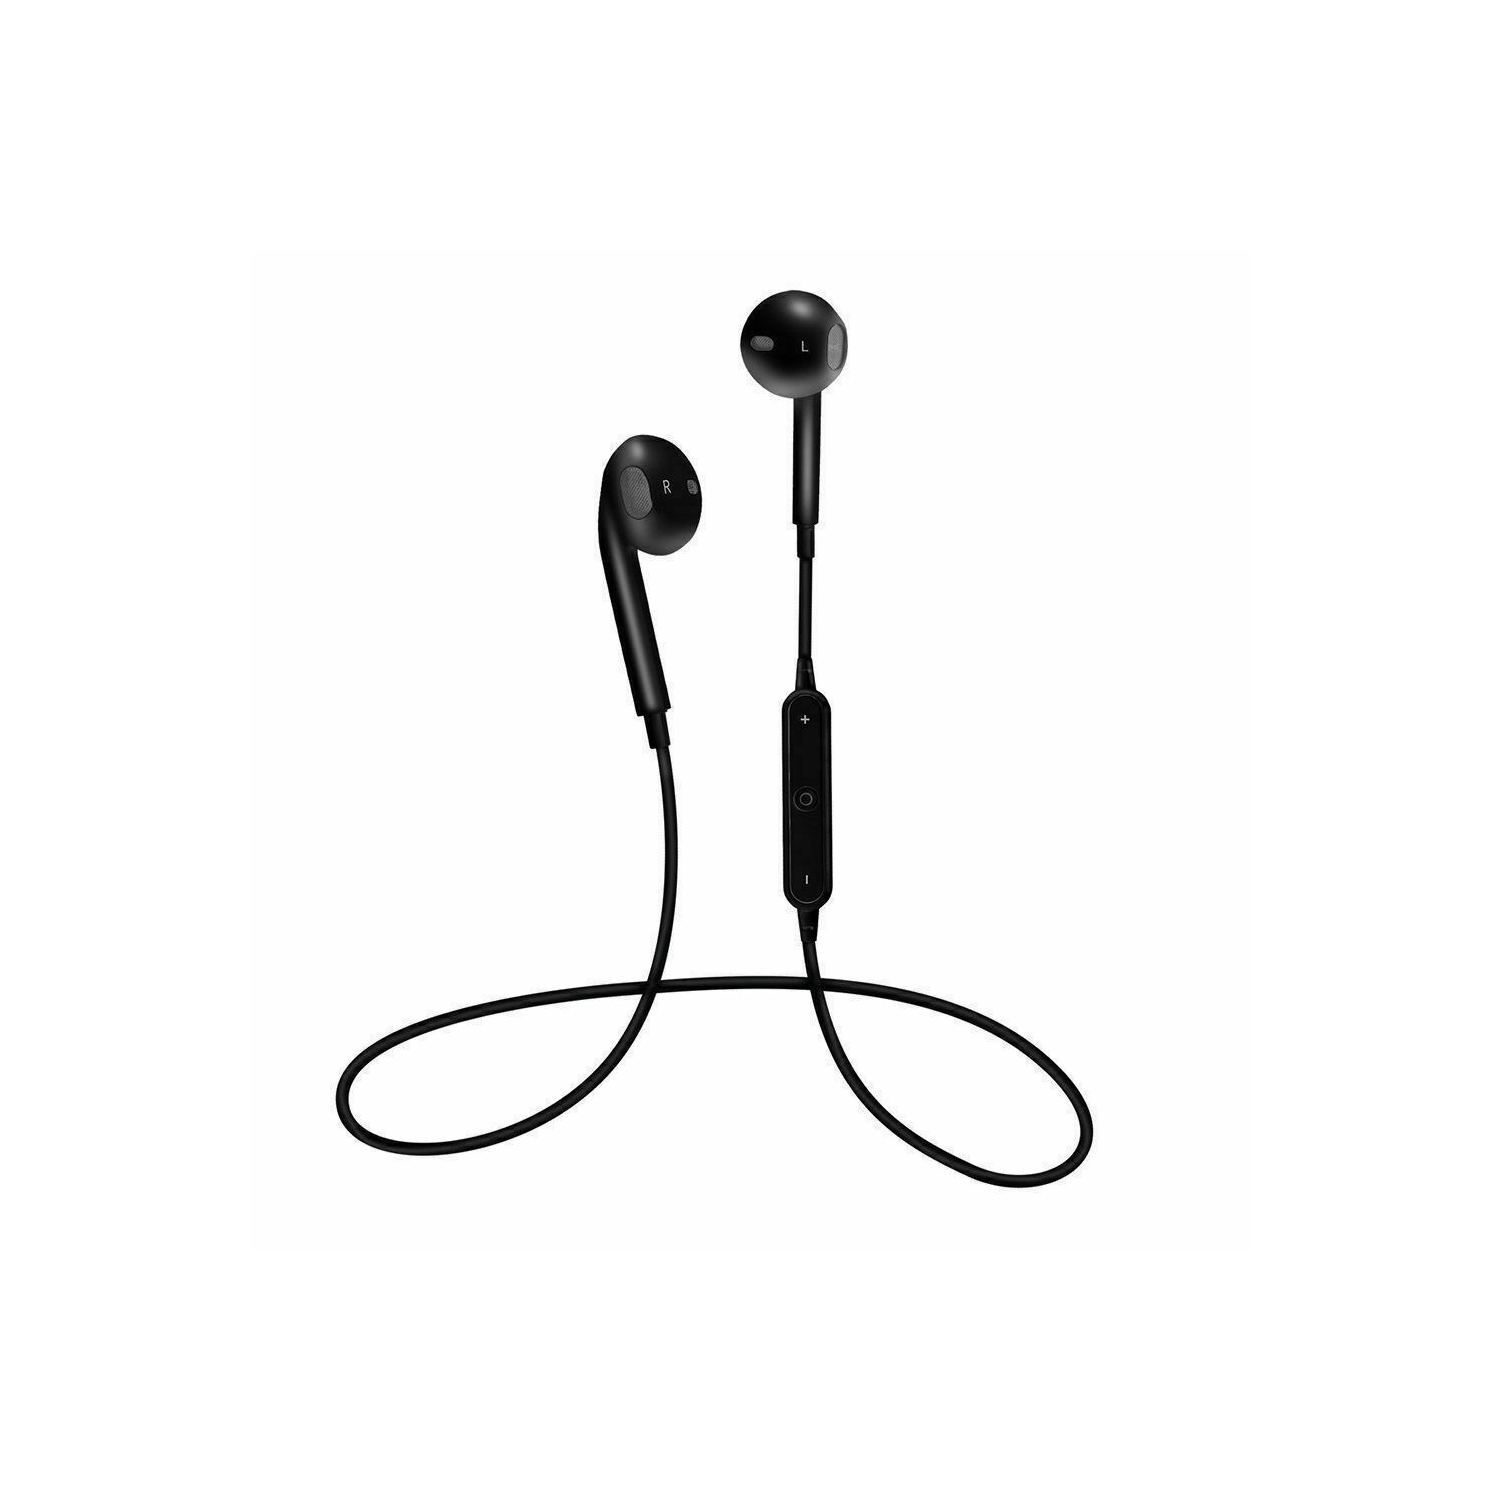 Wireless Bluetooth Sports Headphones Earphones Headset for iPad iPhone Samsung